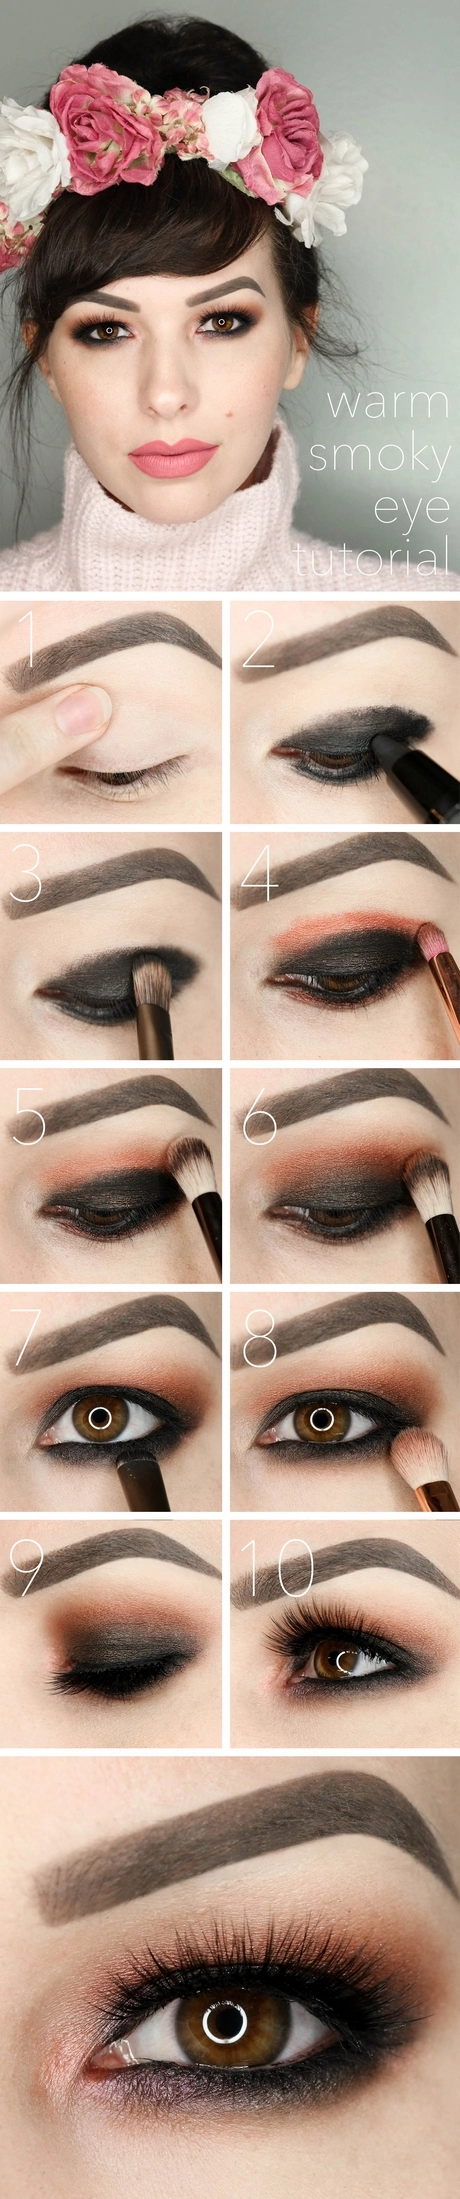 mac-smokey-eye-makeup-tutorial-65_10-4 Mac smokey eye make-up tutorial